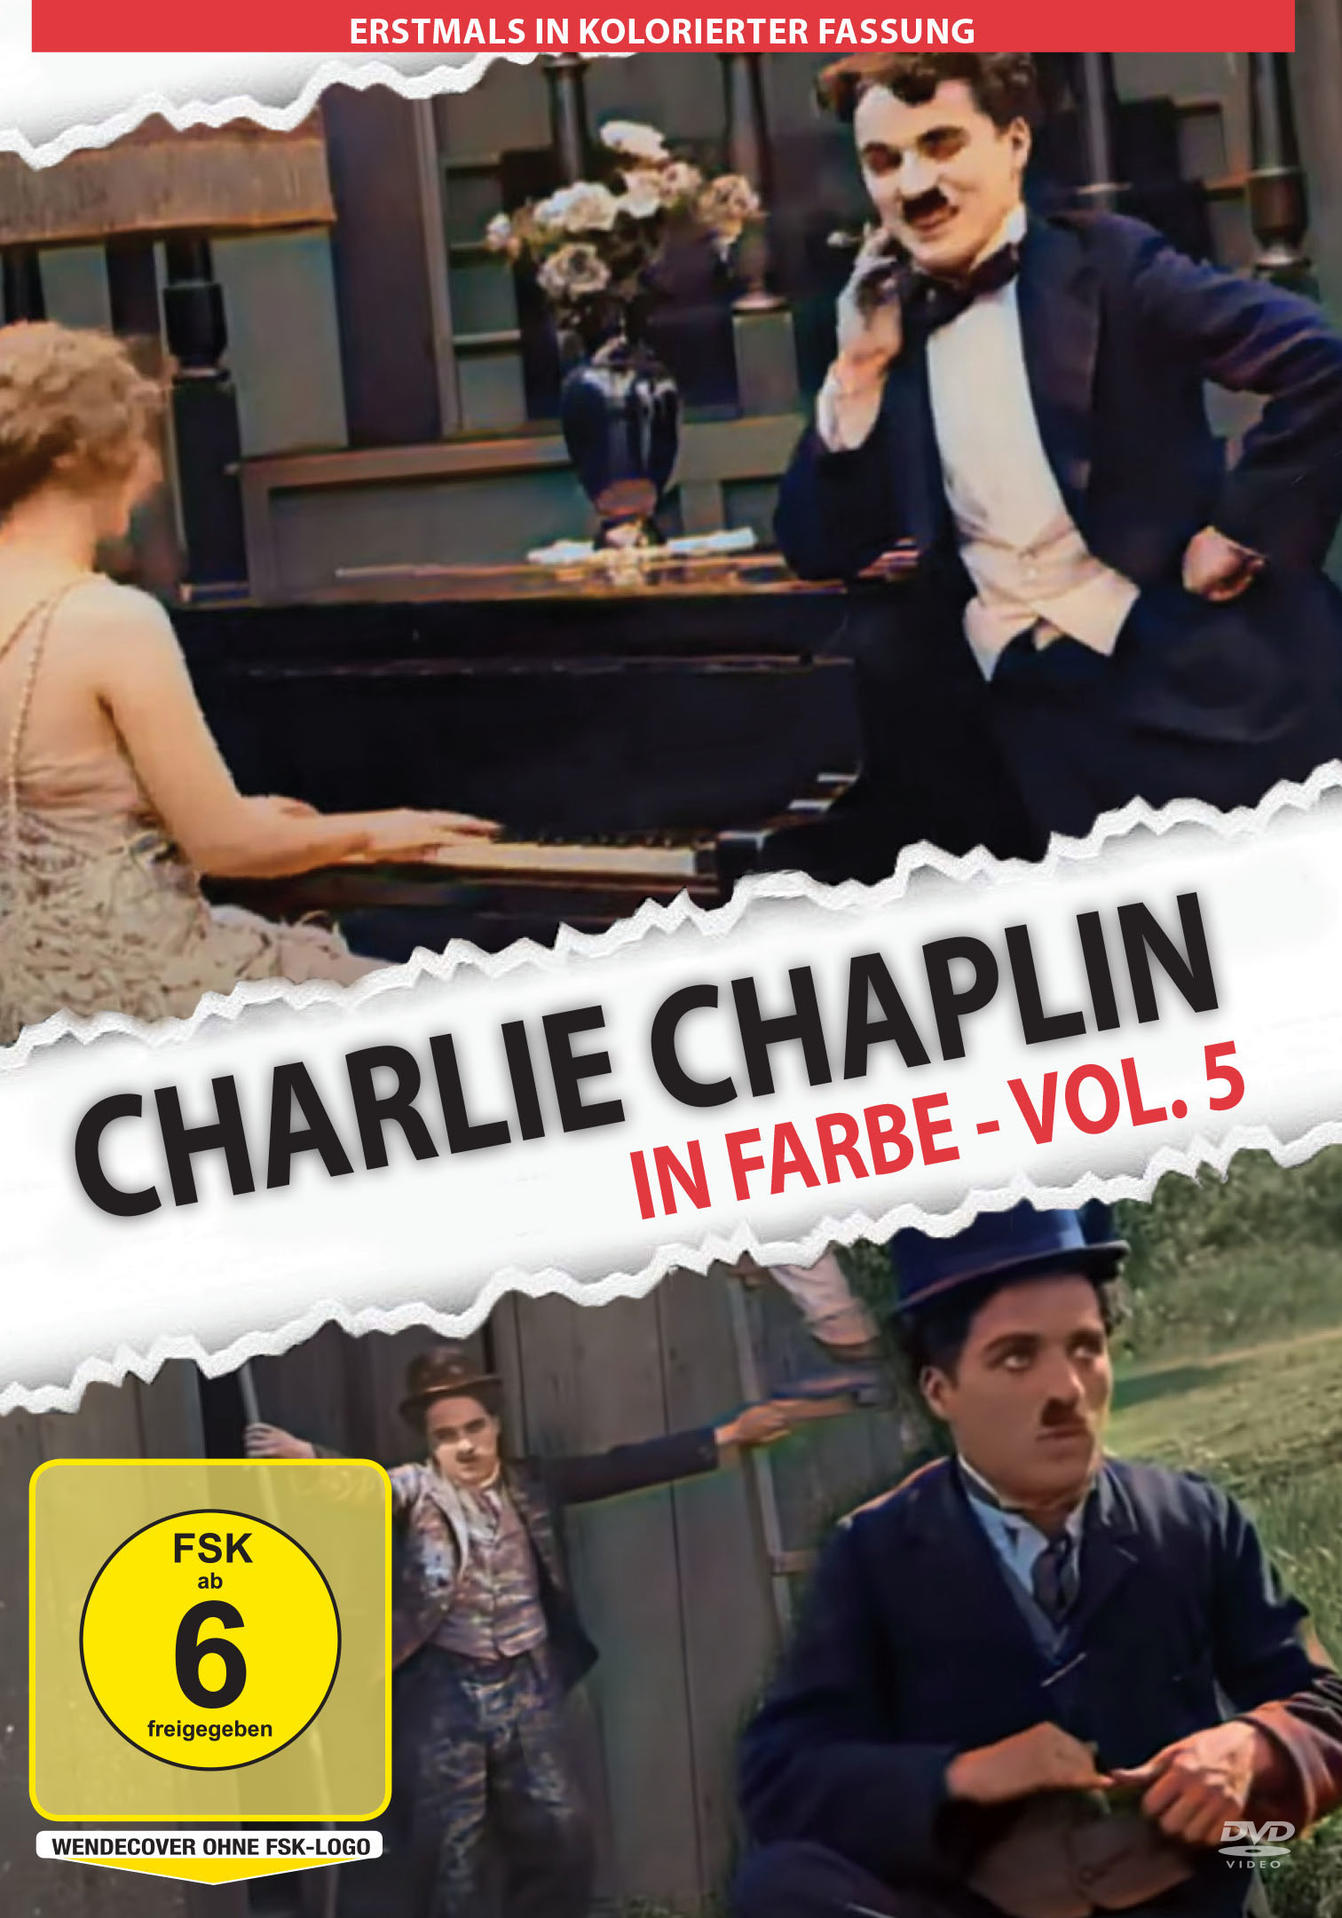 Charlie Chaplin in DVD Vol. Farbe 5